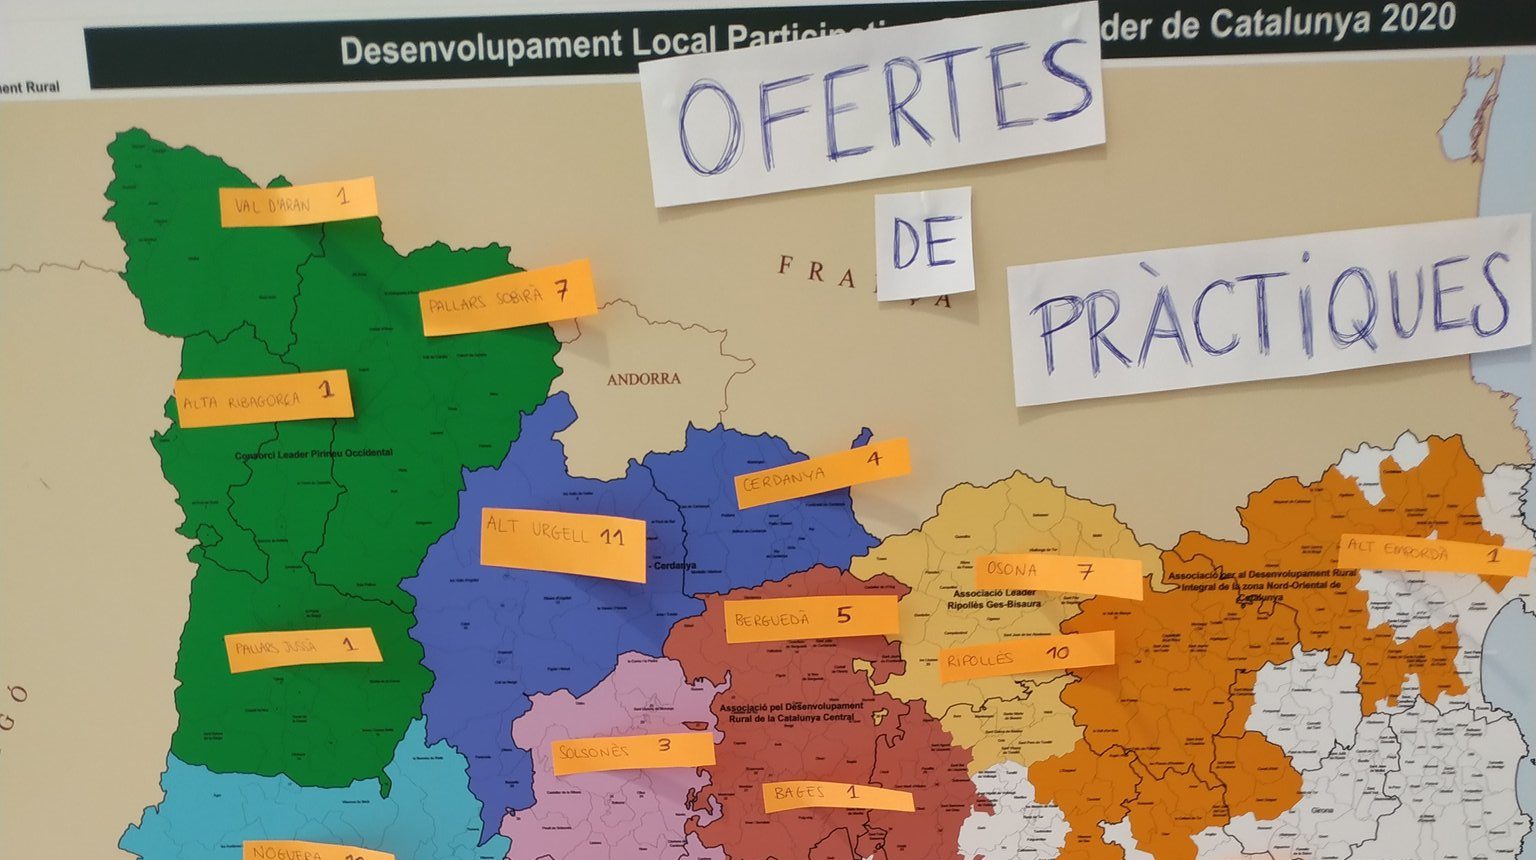 Odisseu ofereix pràctiques a 558 municipis | Odisseum